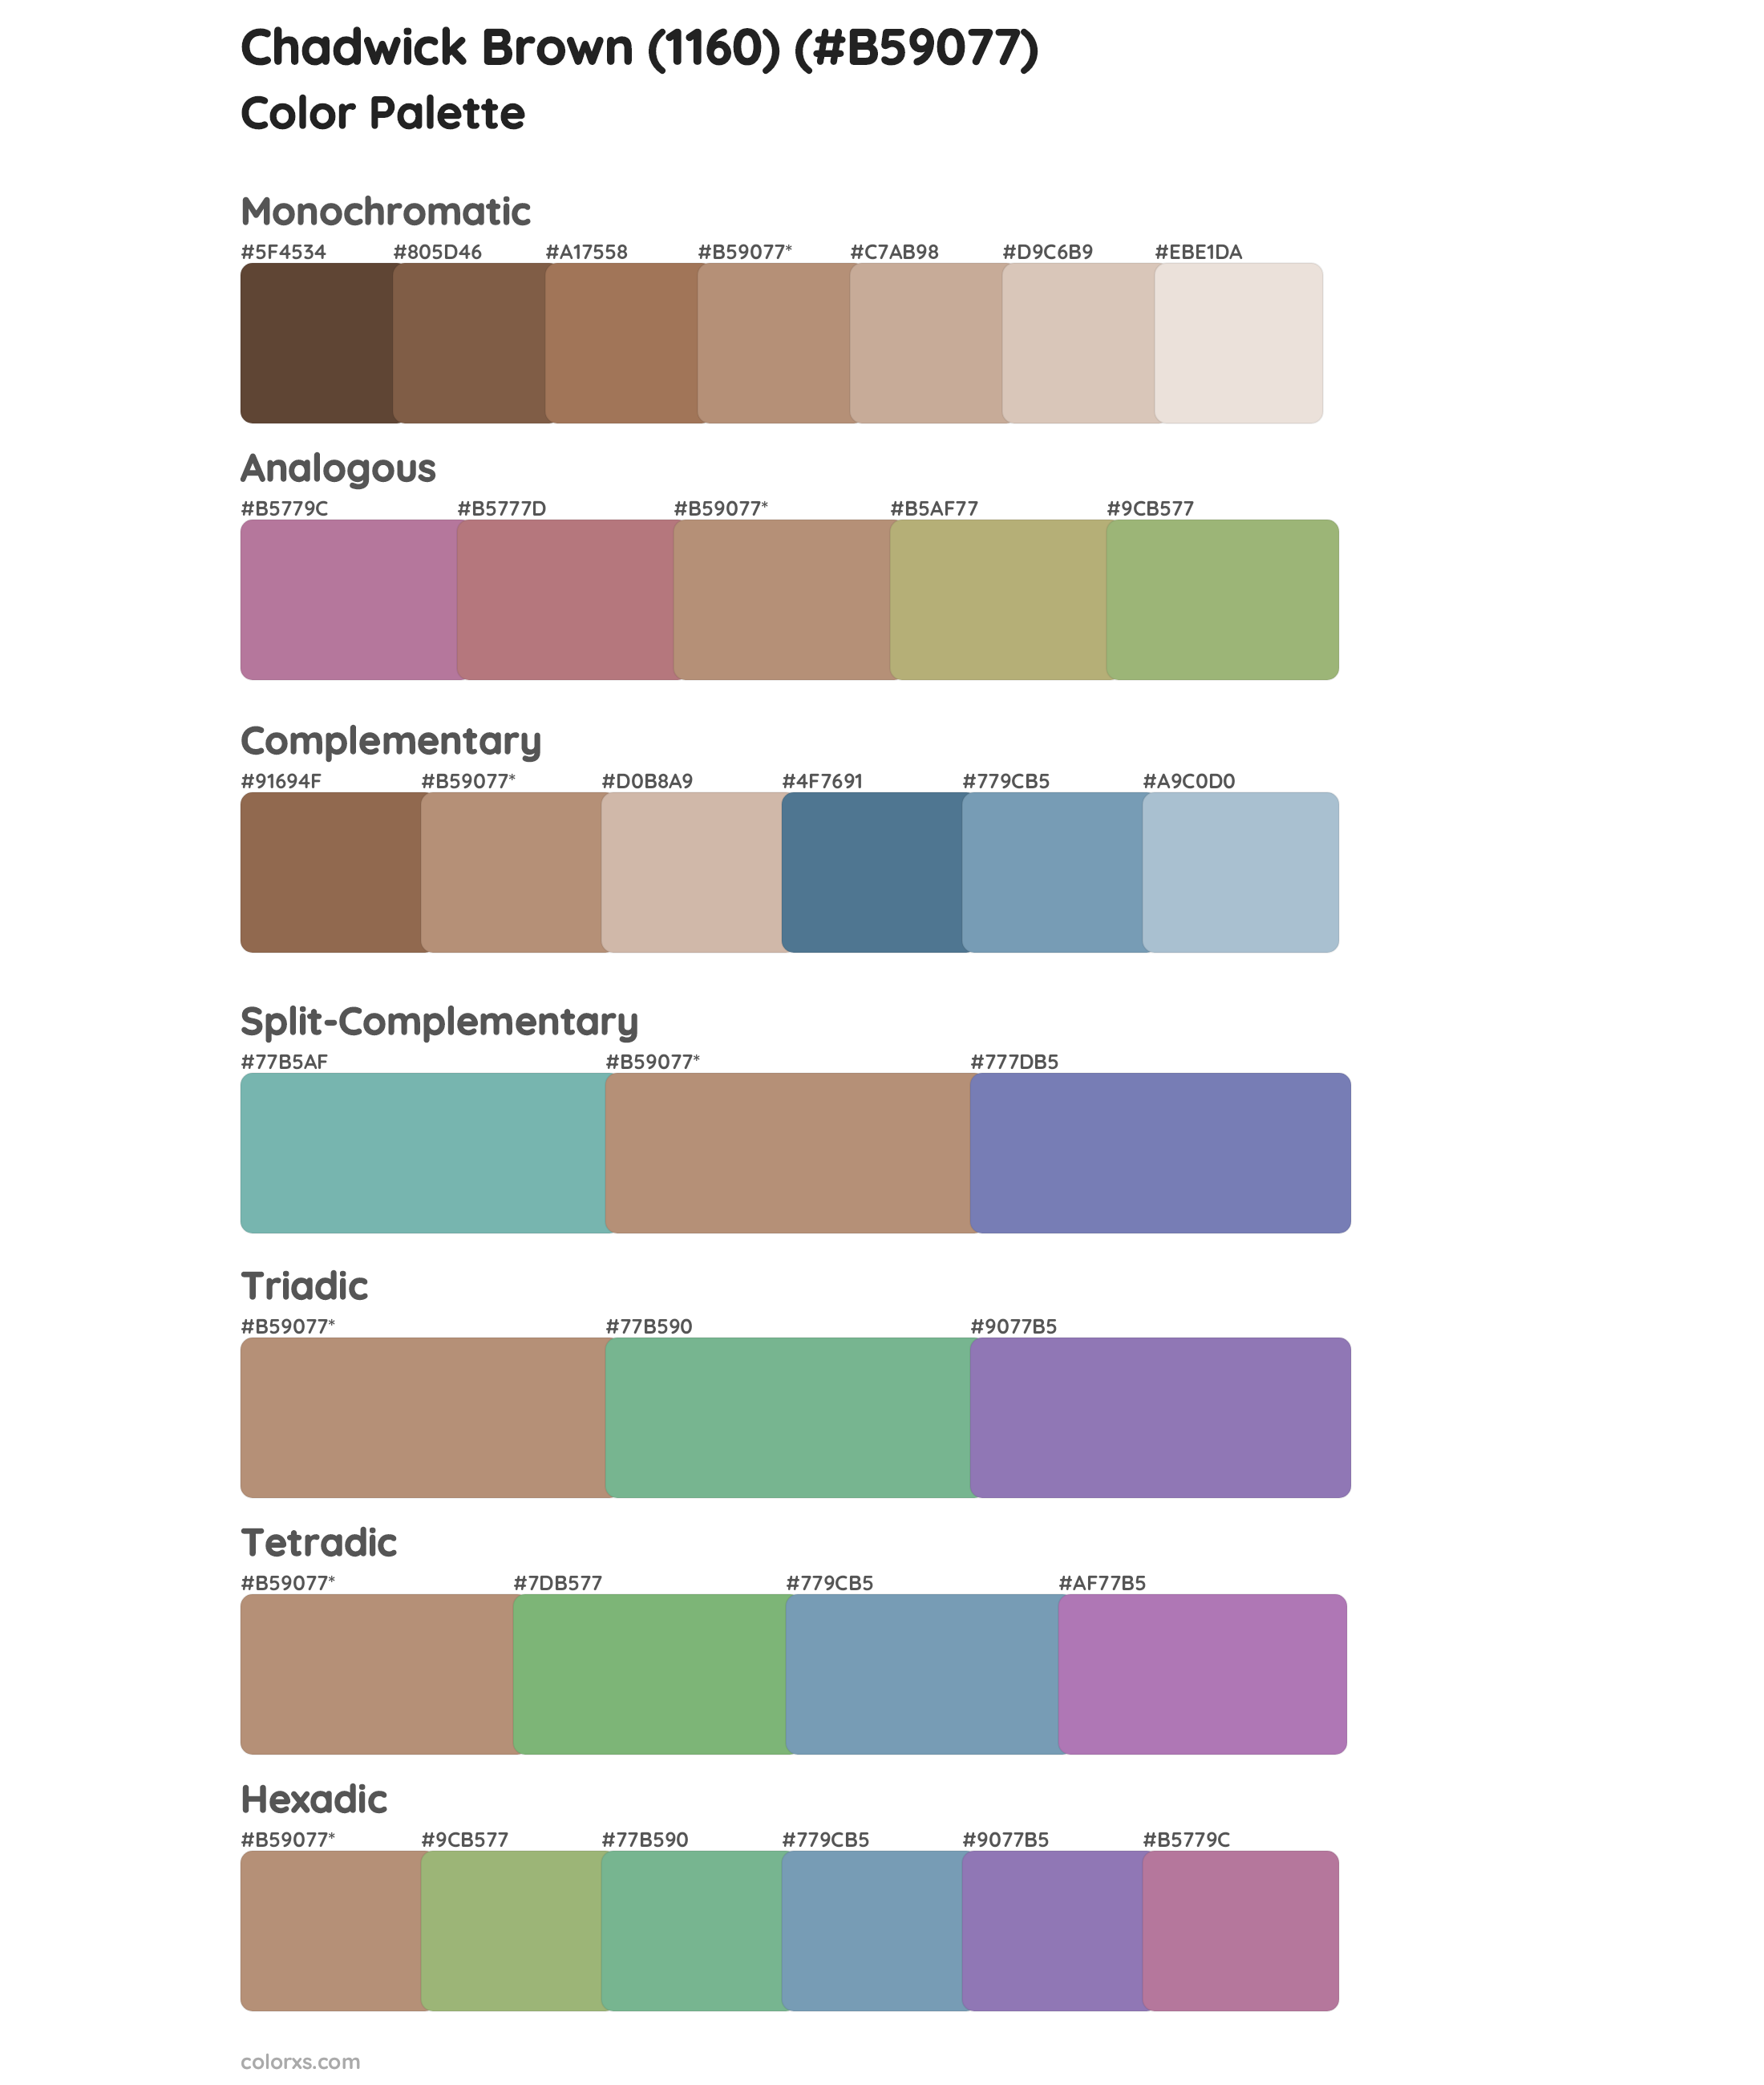 Chadwick Brown (1160) Color Scheme Palettes